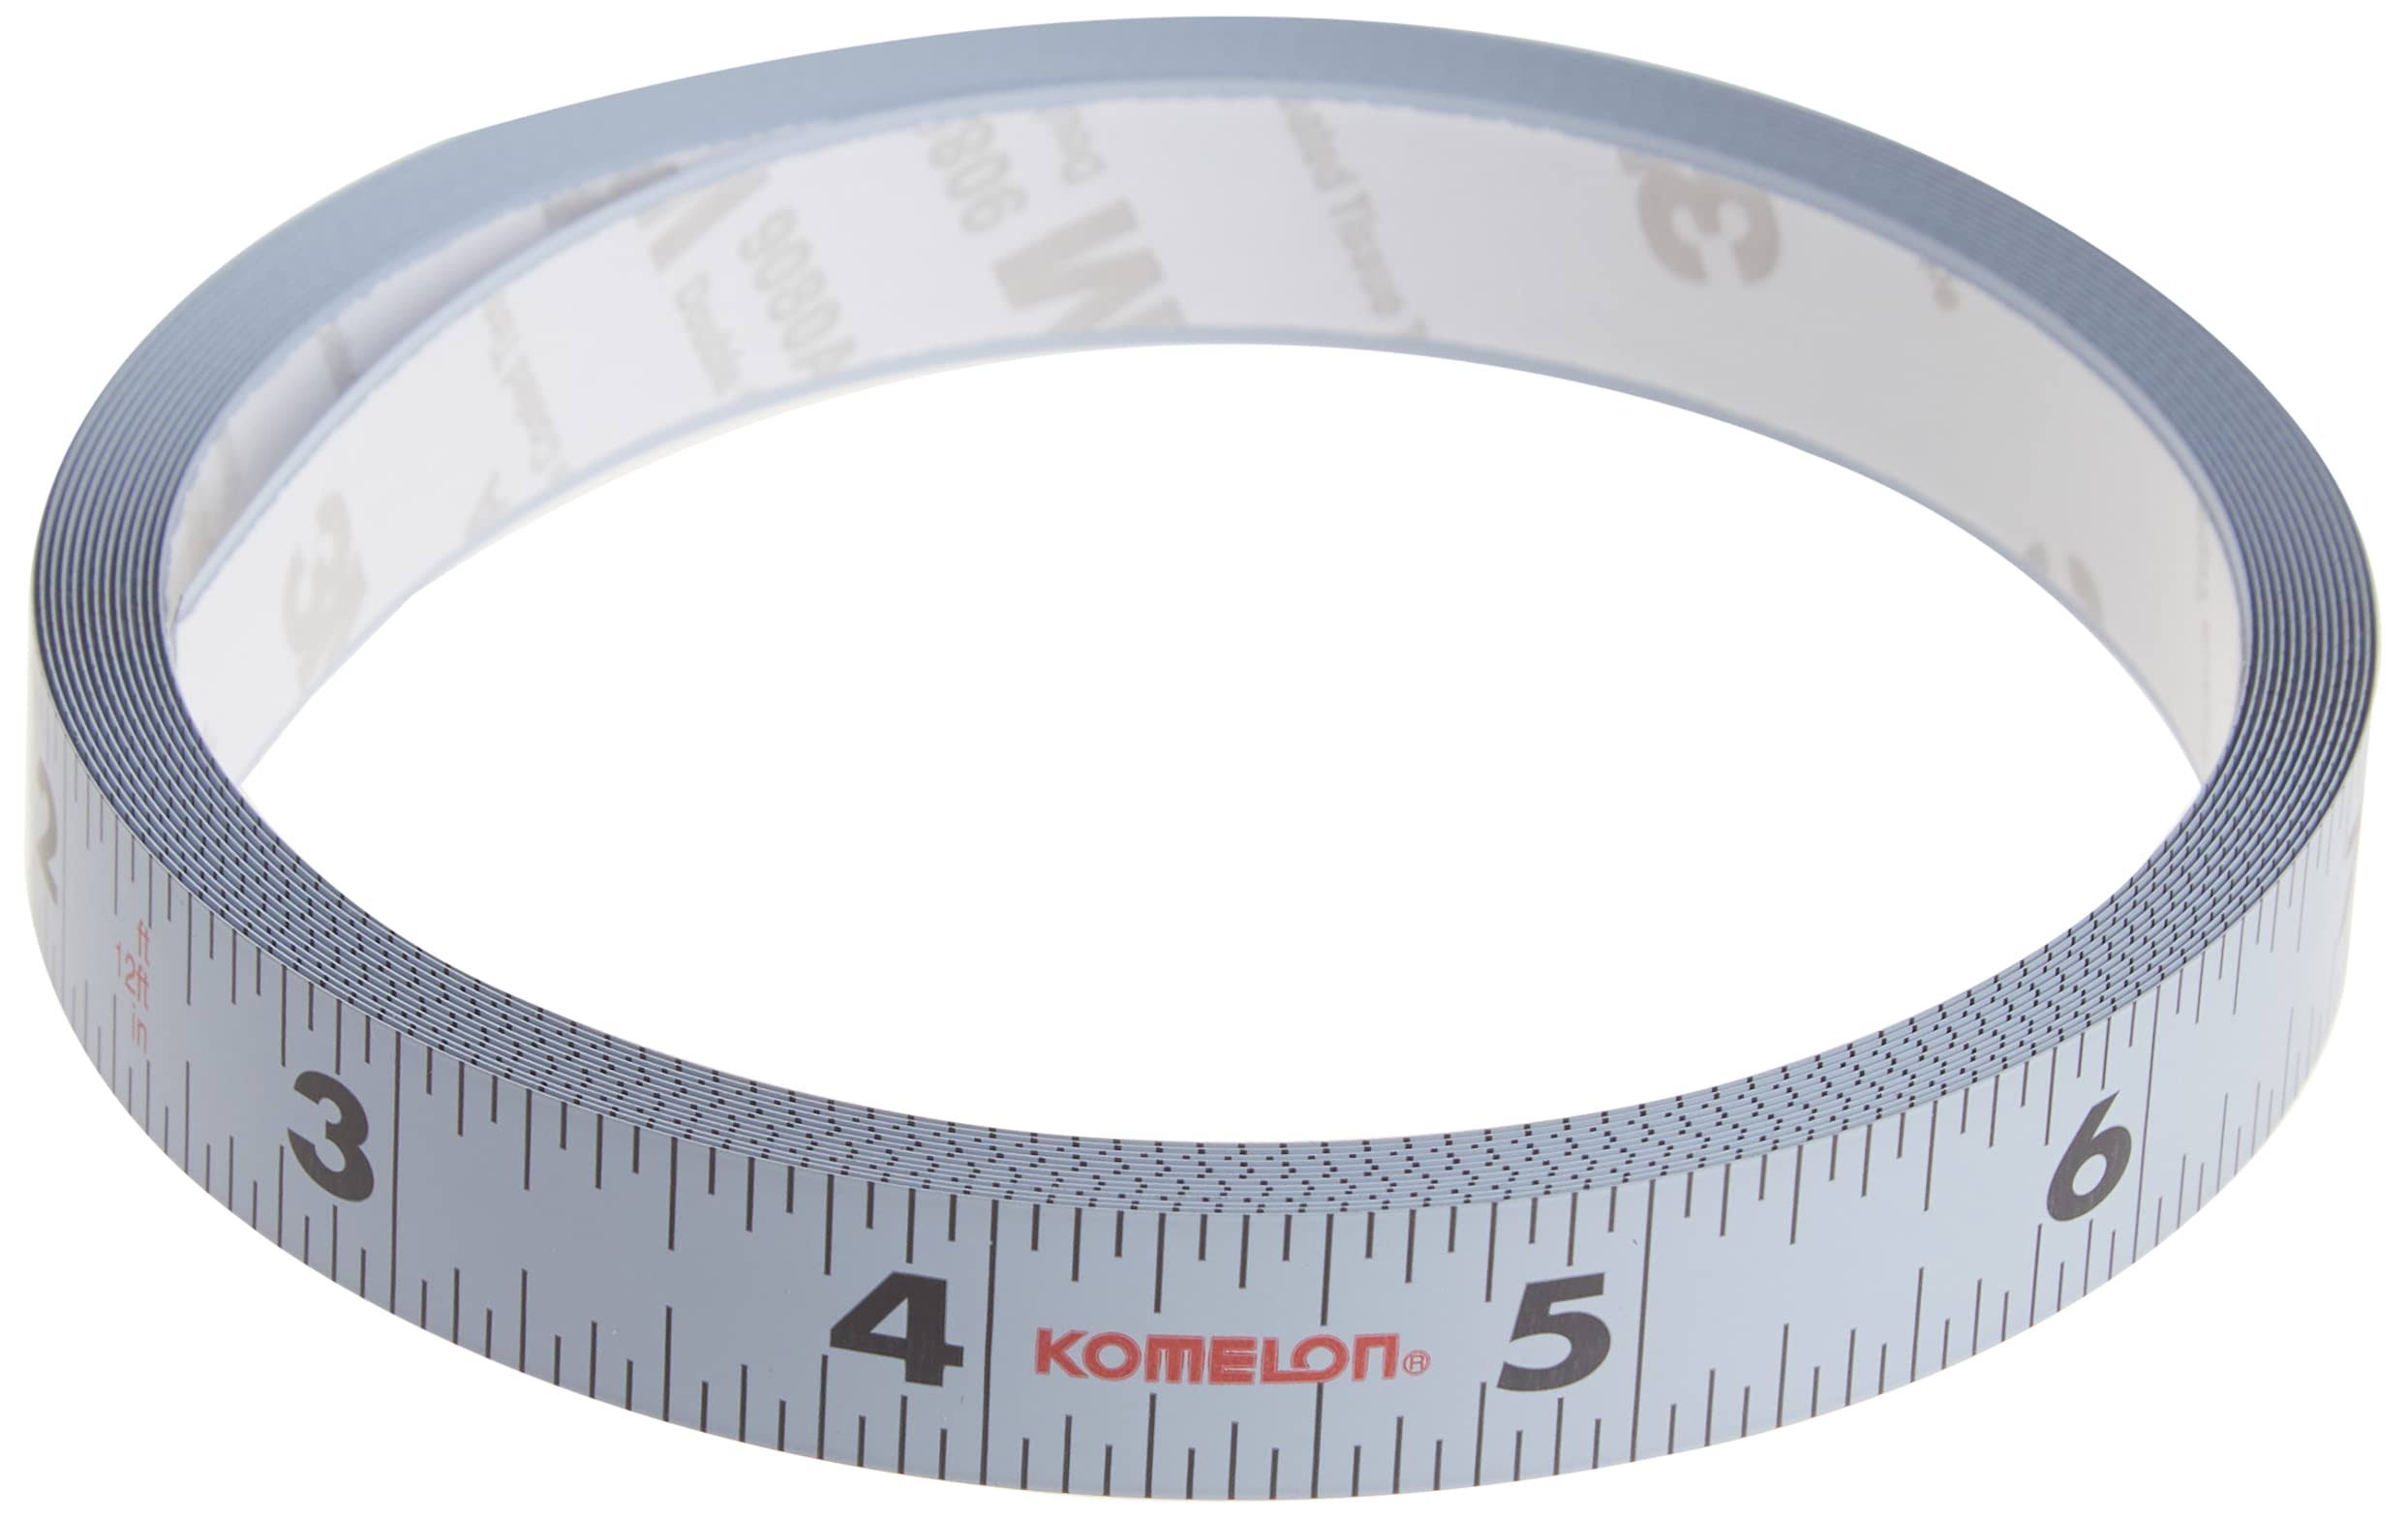 Komelon Stick and Measure Flat Tape Measure